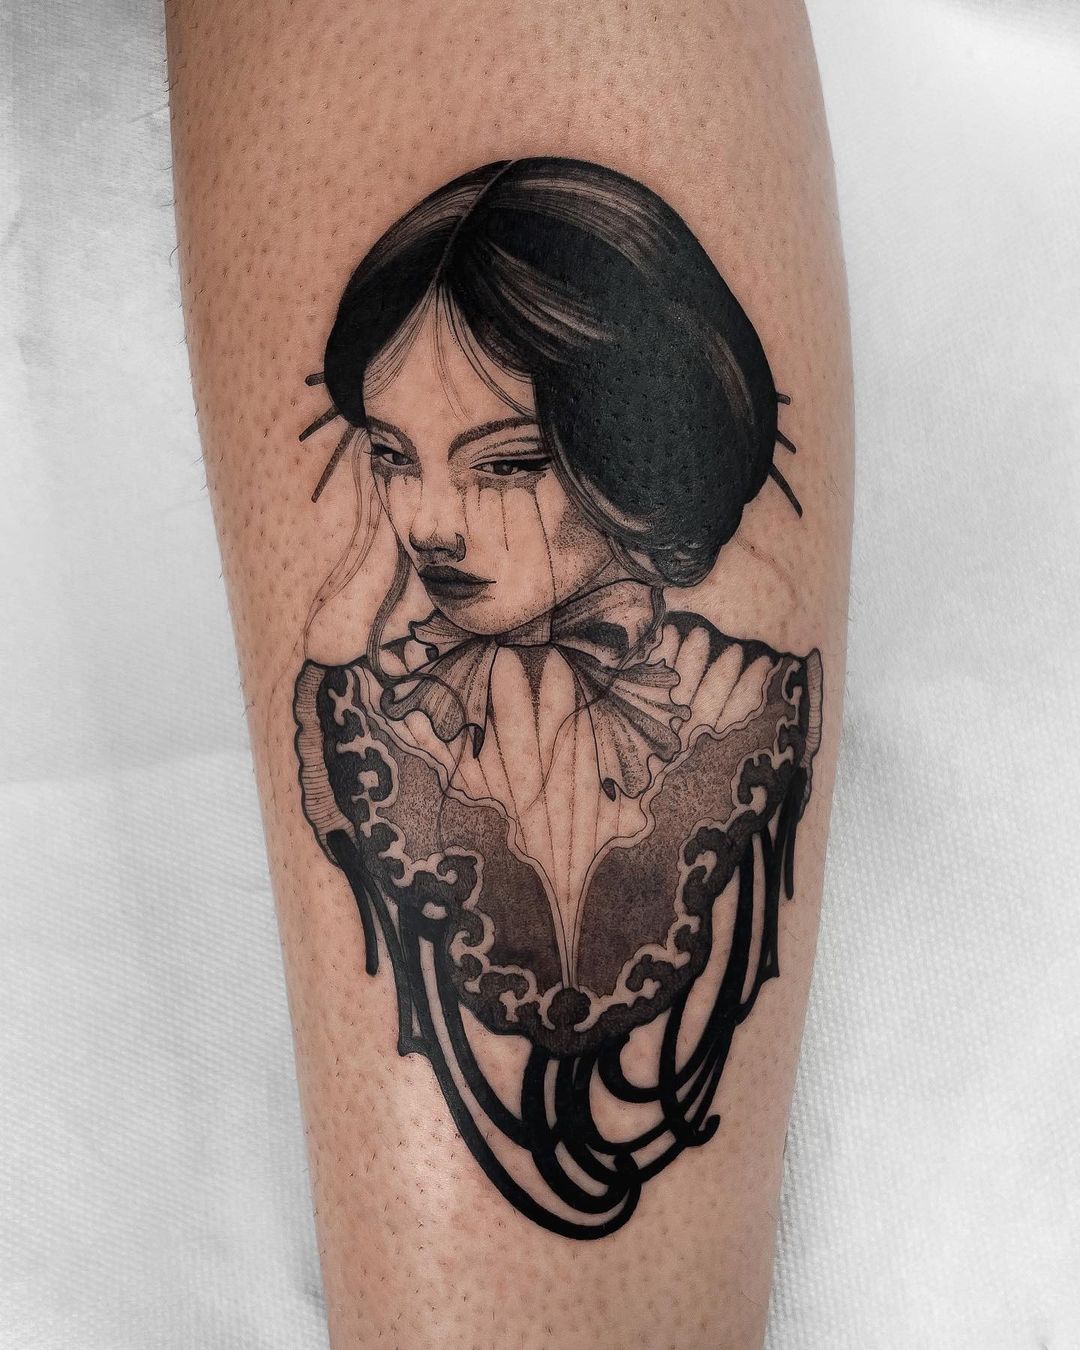 Minimal portrait tattoo by riccie otomn